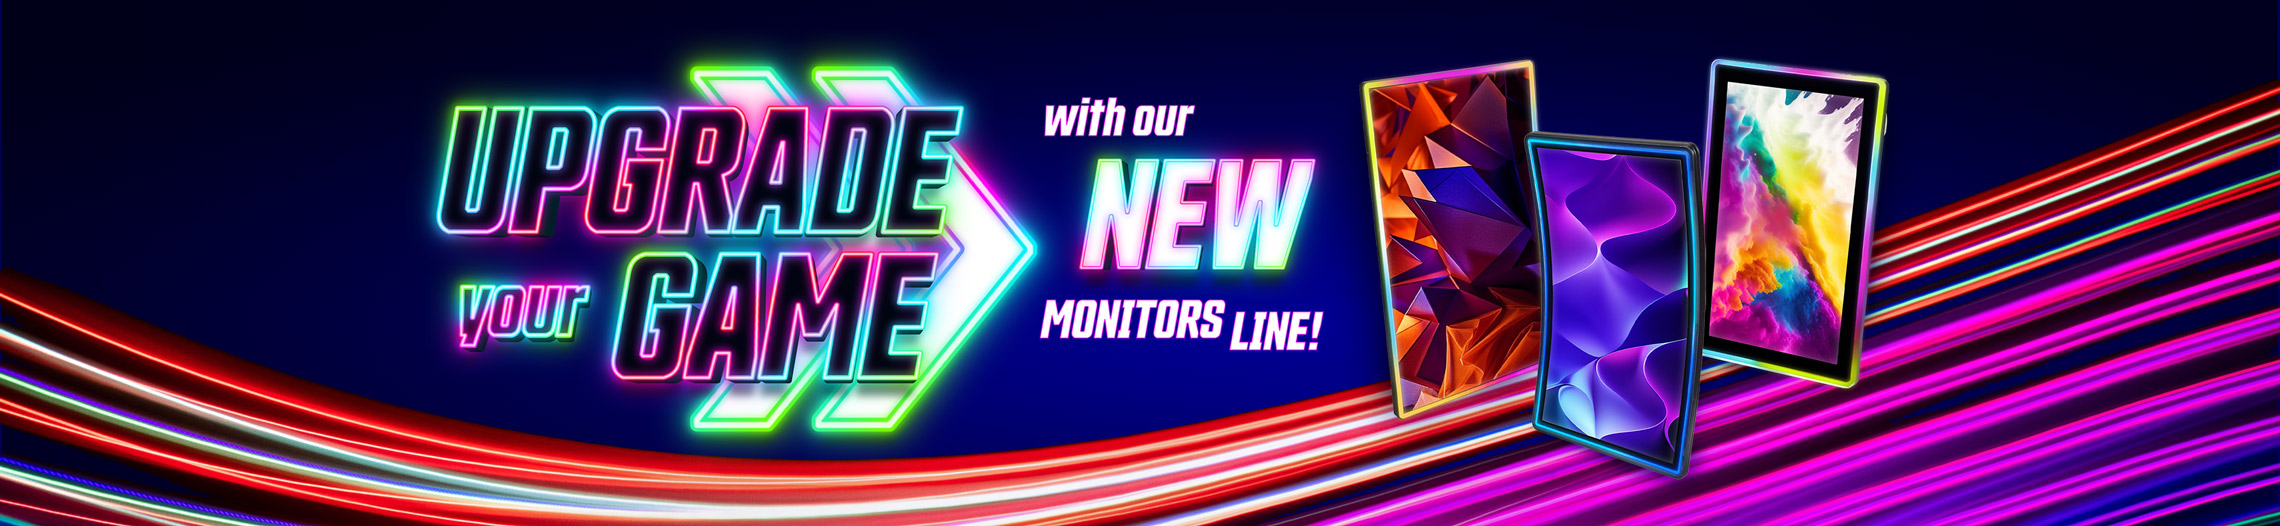 New Monitors Line!